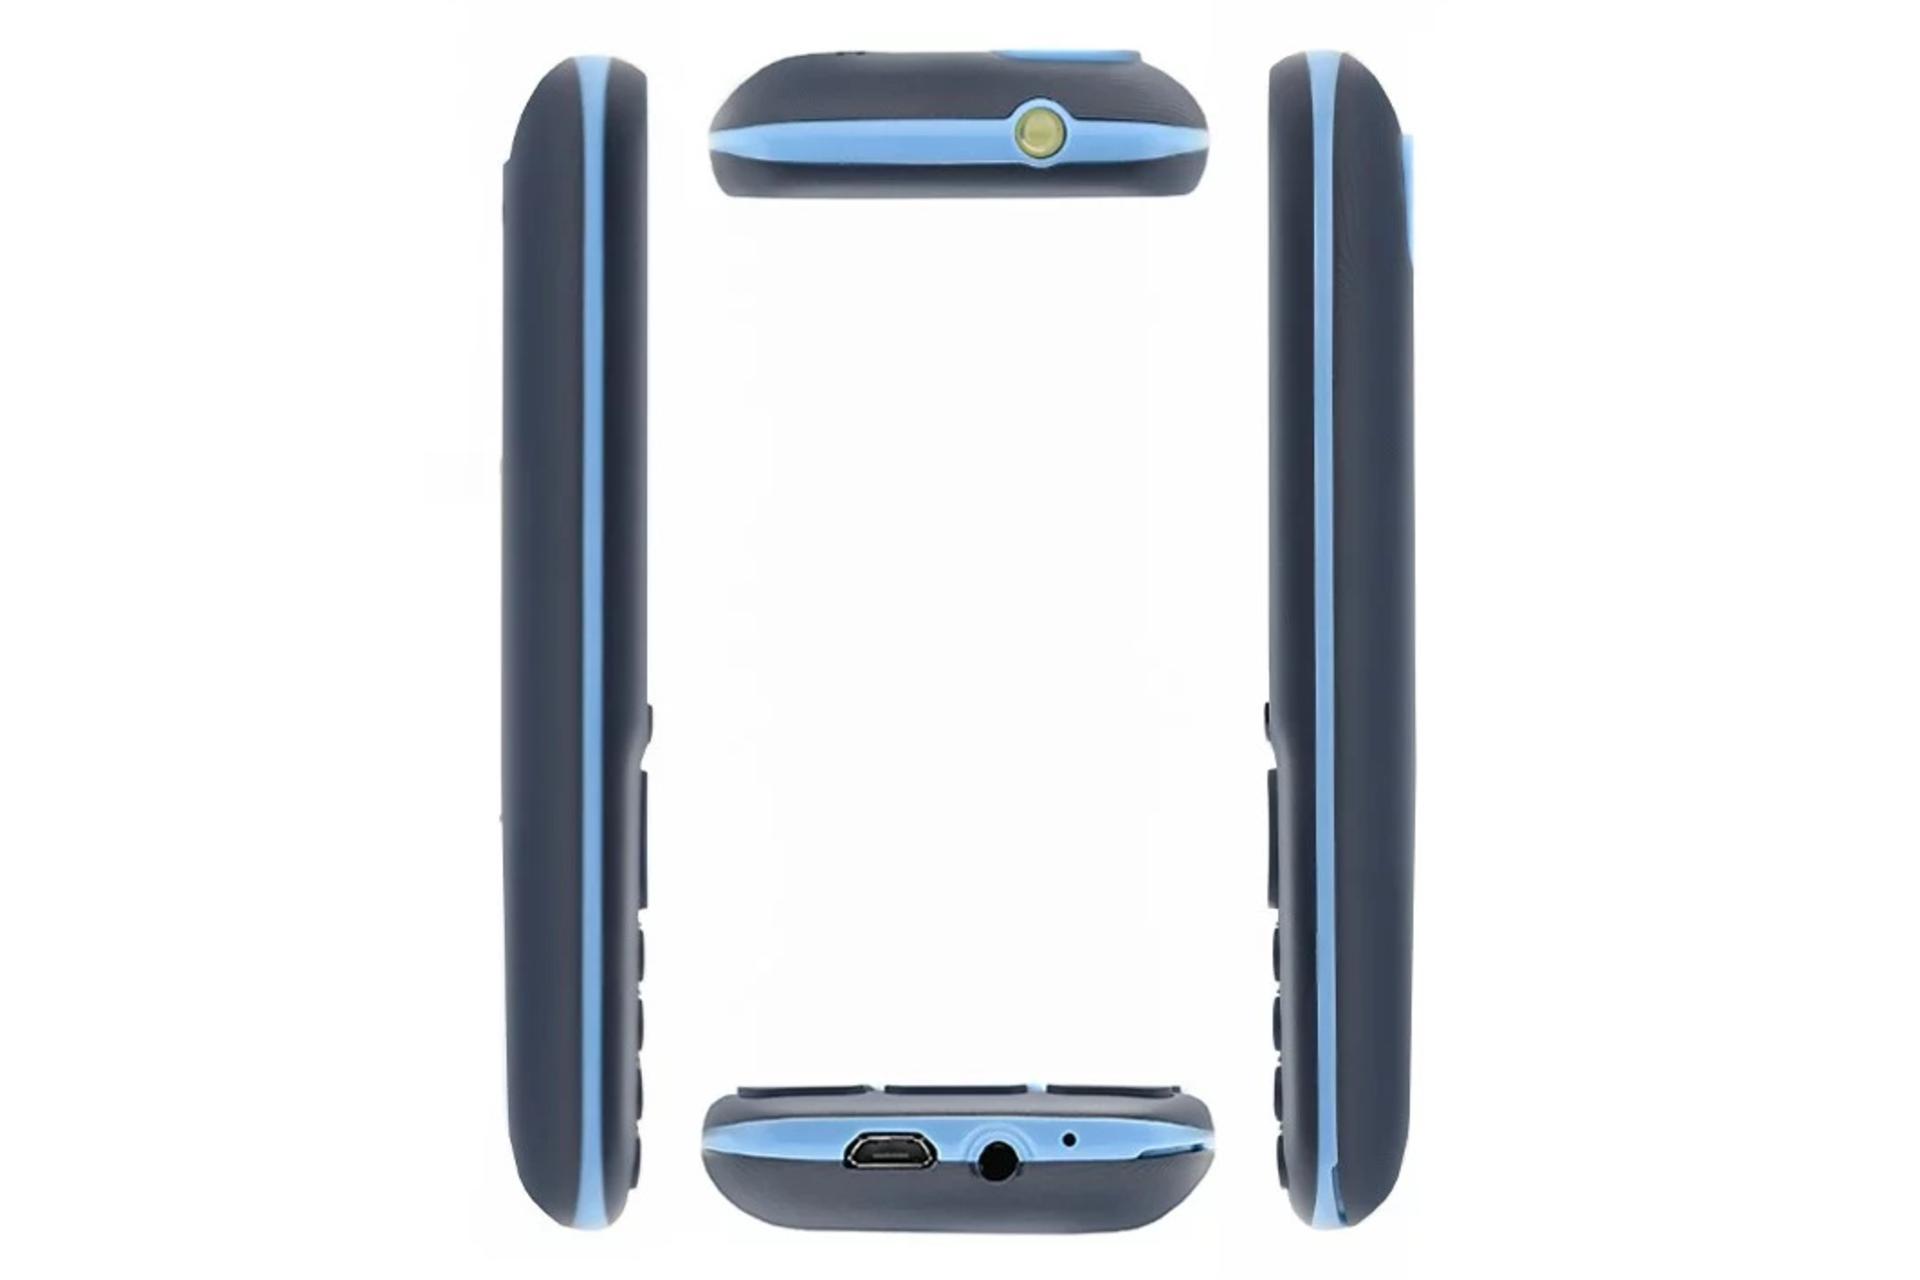 نمای جانبی گوشی موبایل کاجیتل KGTEL K2173 آبی